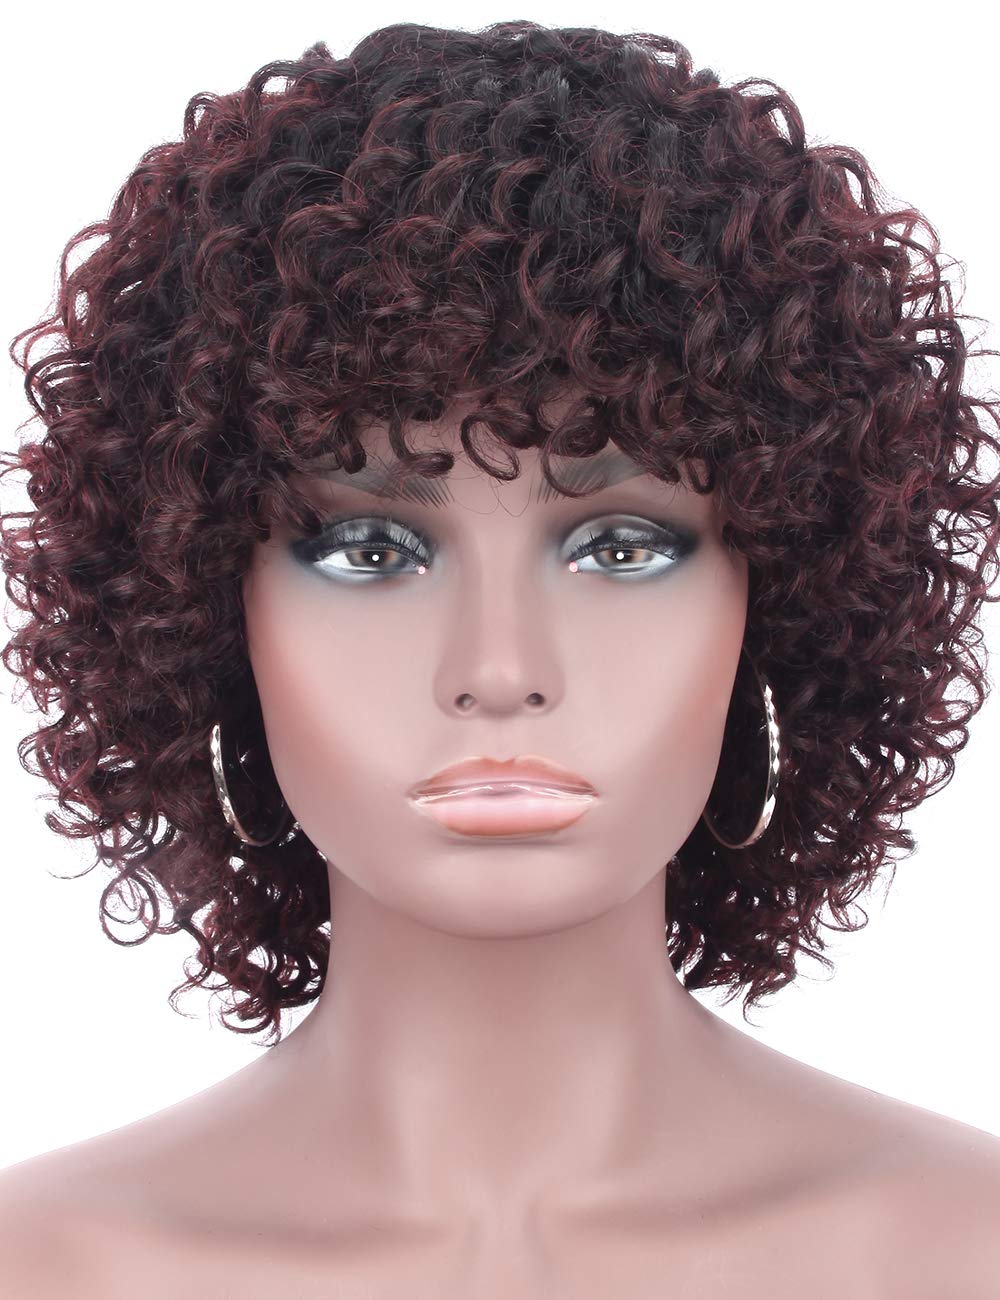 Beauart 100% Remy Human Hair Wigs for Black Women Short Curly Dark ...